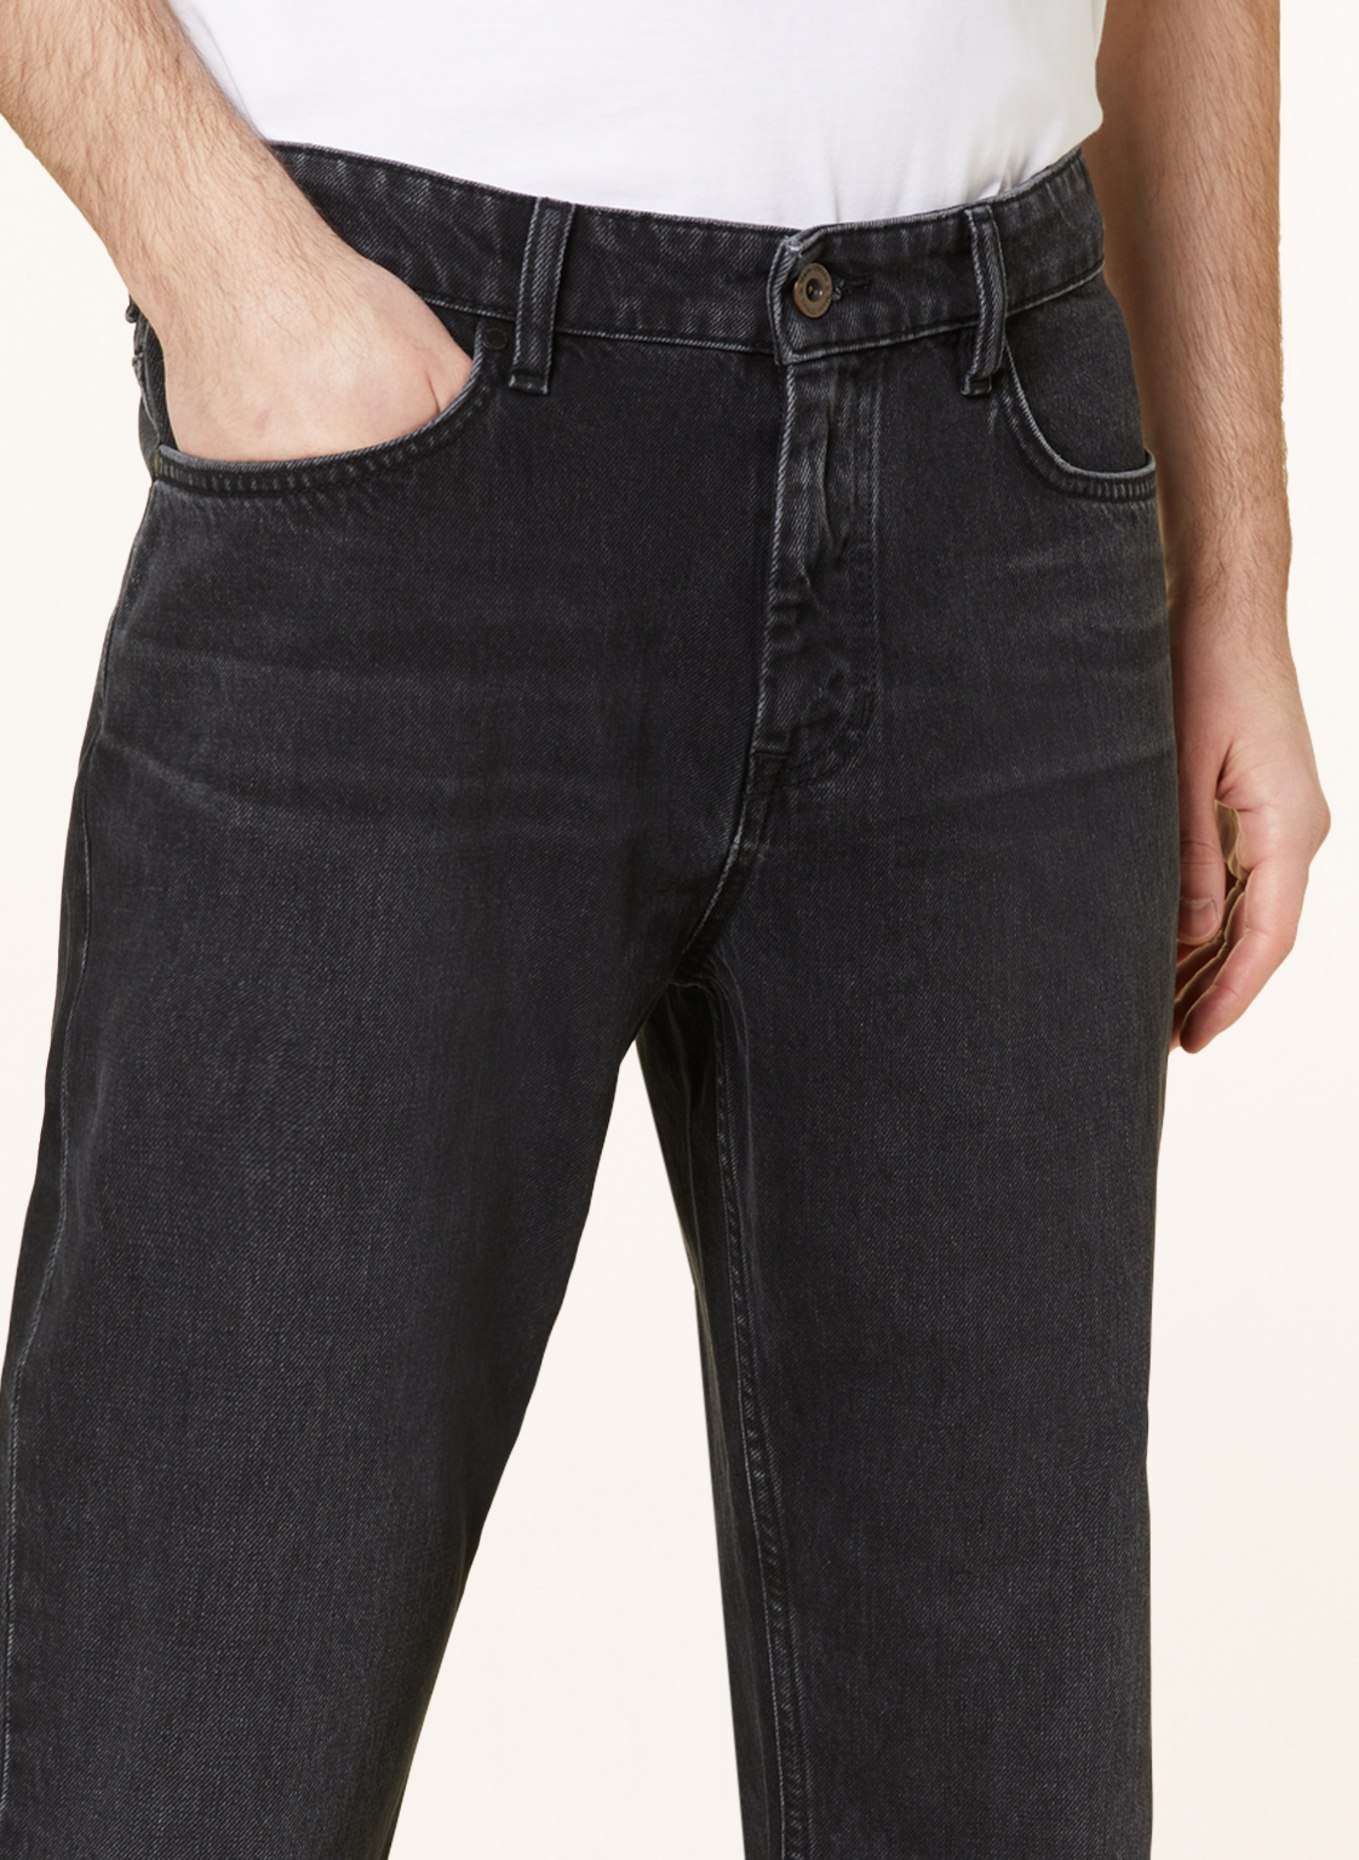 Marc O'Polo Jeans tapered fit, Color: 030 Black od black wash (Image 5)